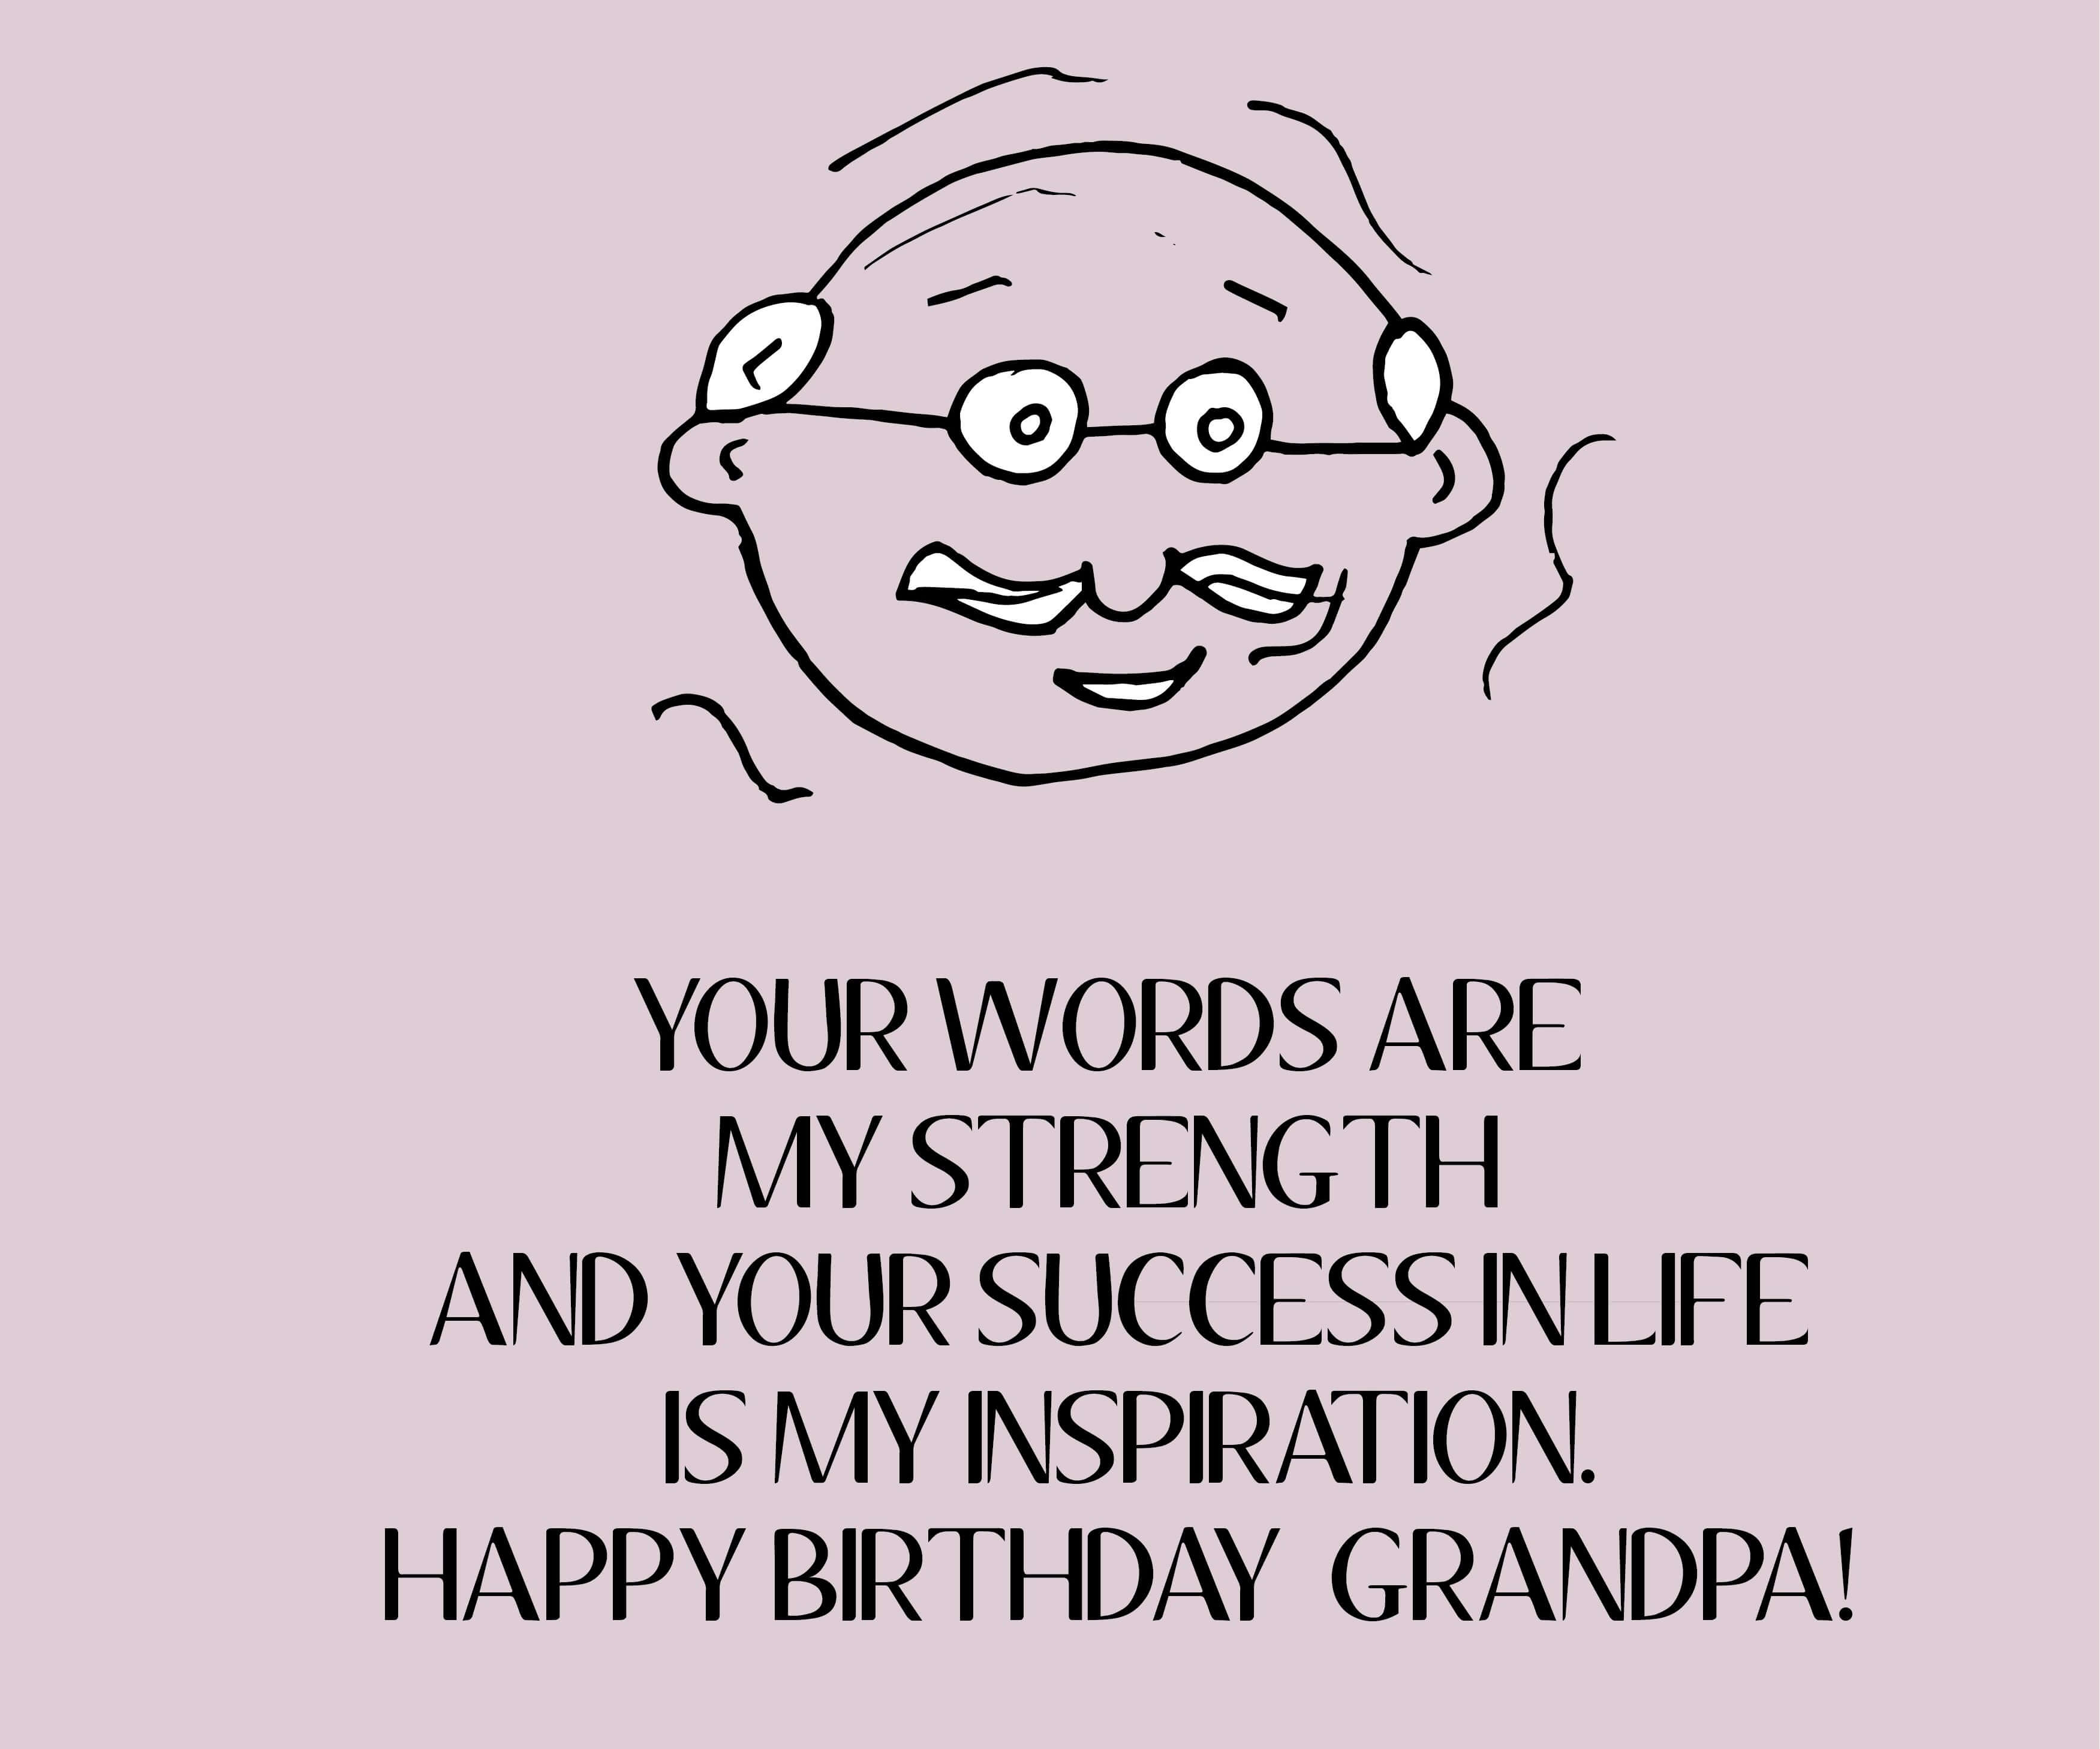 Happy Birthday Wishes For Grandpa